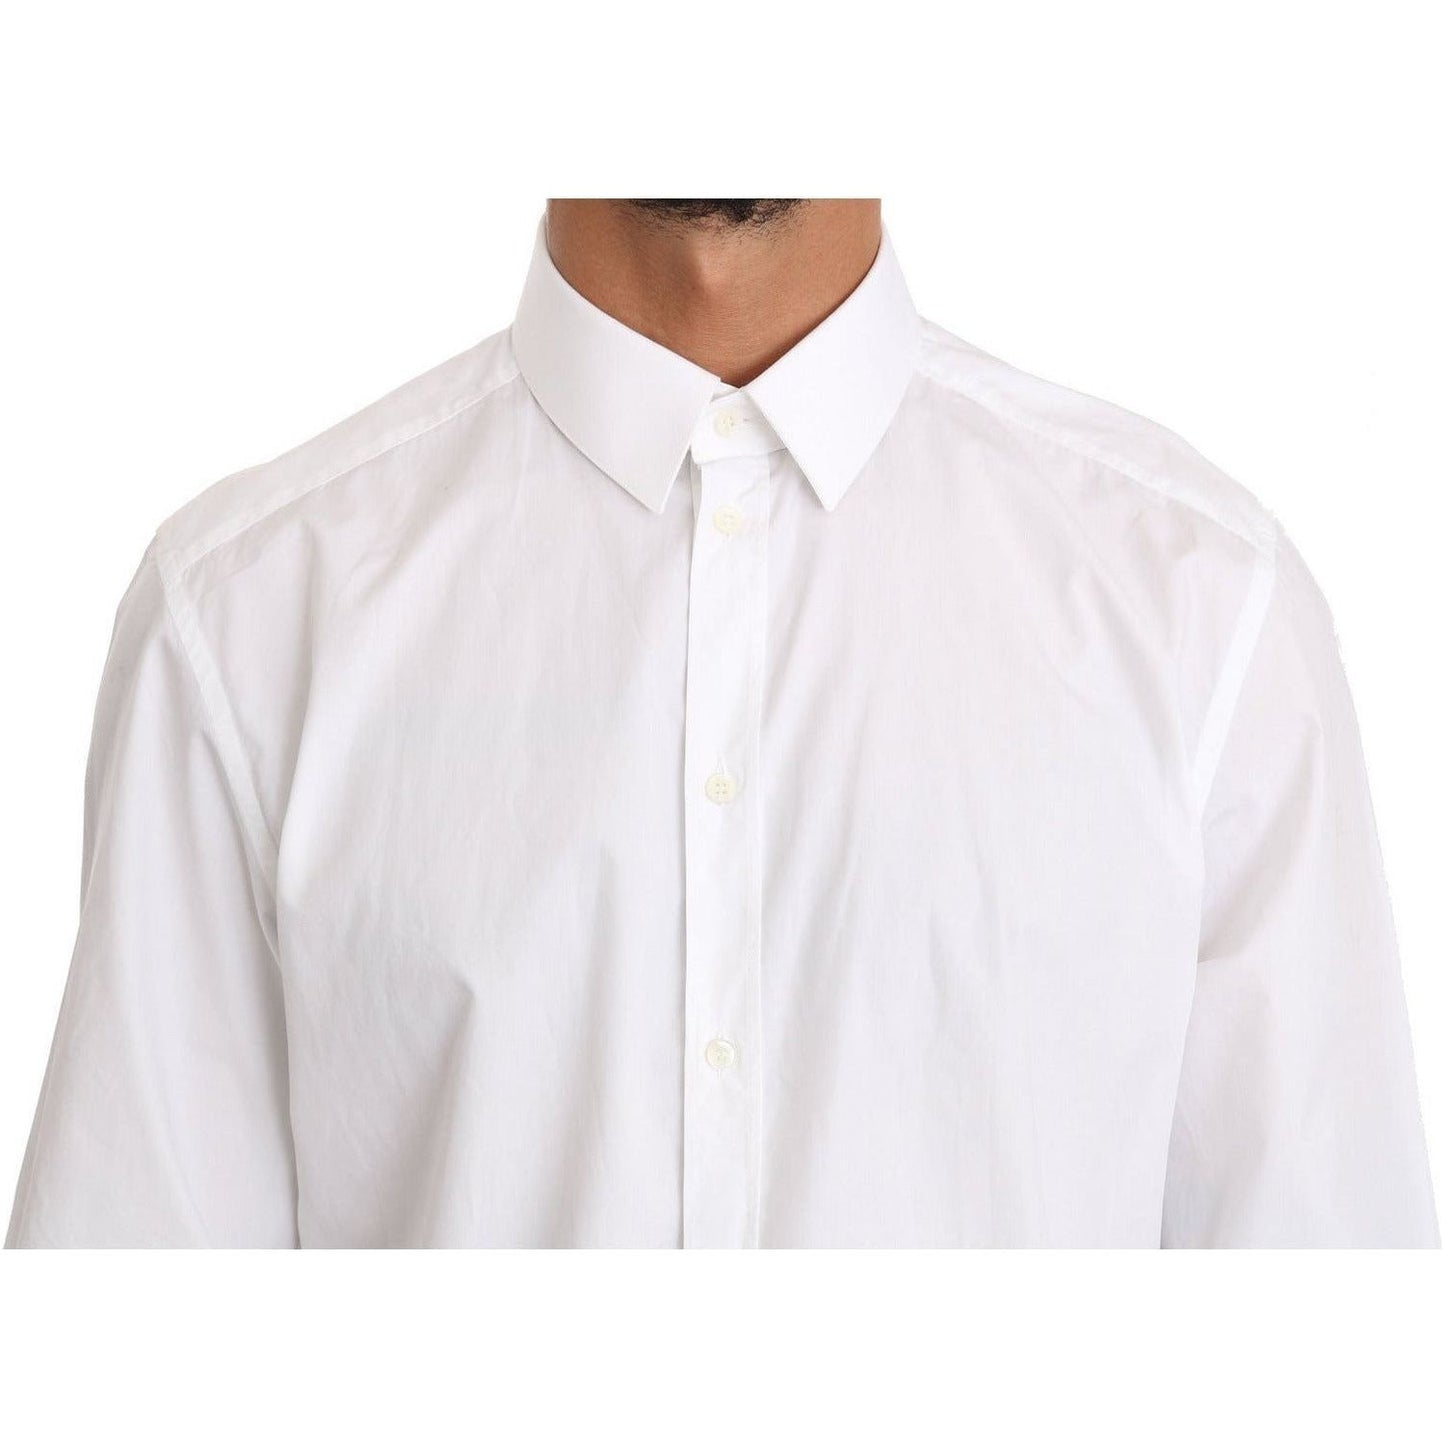 Dolce & Gabbana Elegant Slim Fit Dress Shirt in Pure White MAN SHIRTS white-cotton-gold-dress-shirt